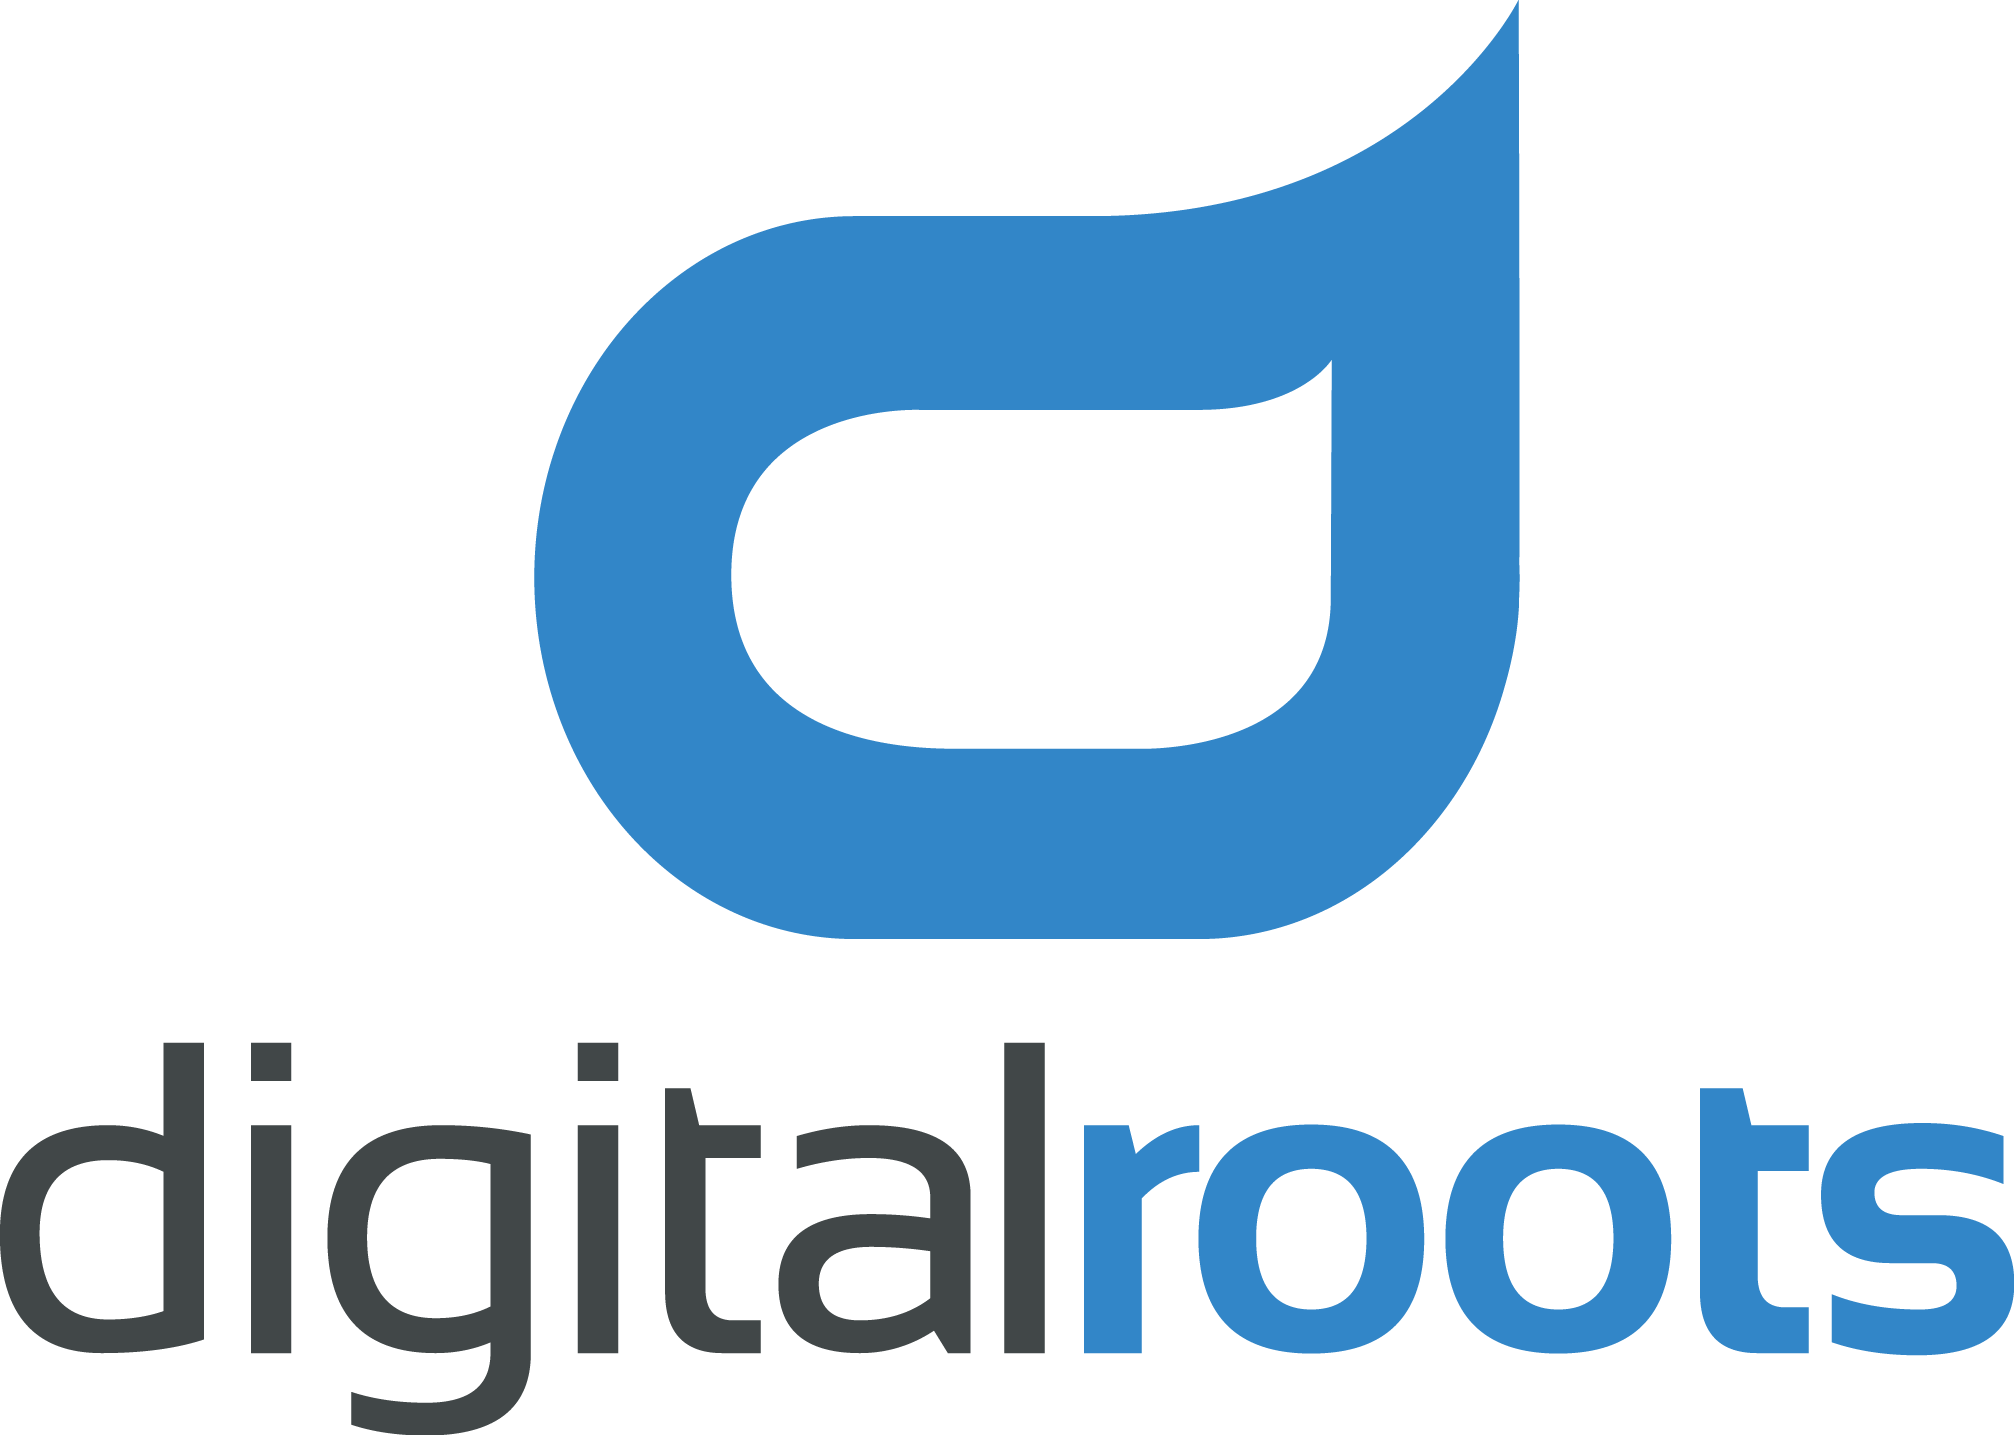 Digitalroots company logo image 